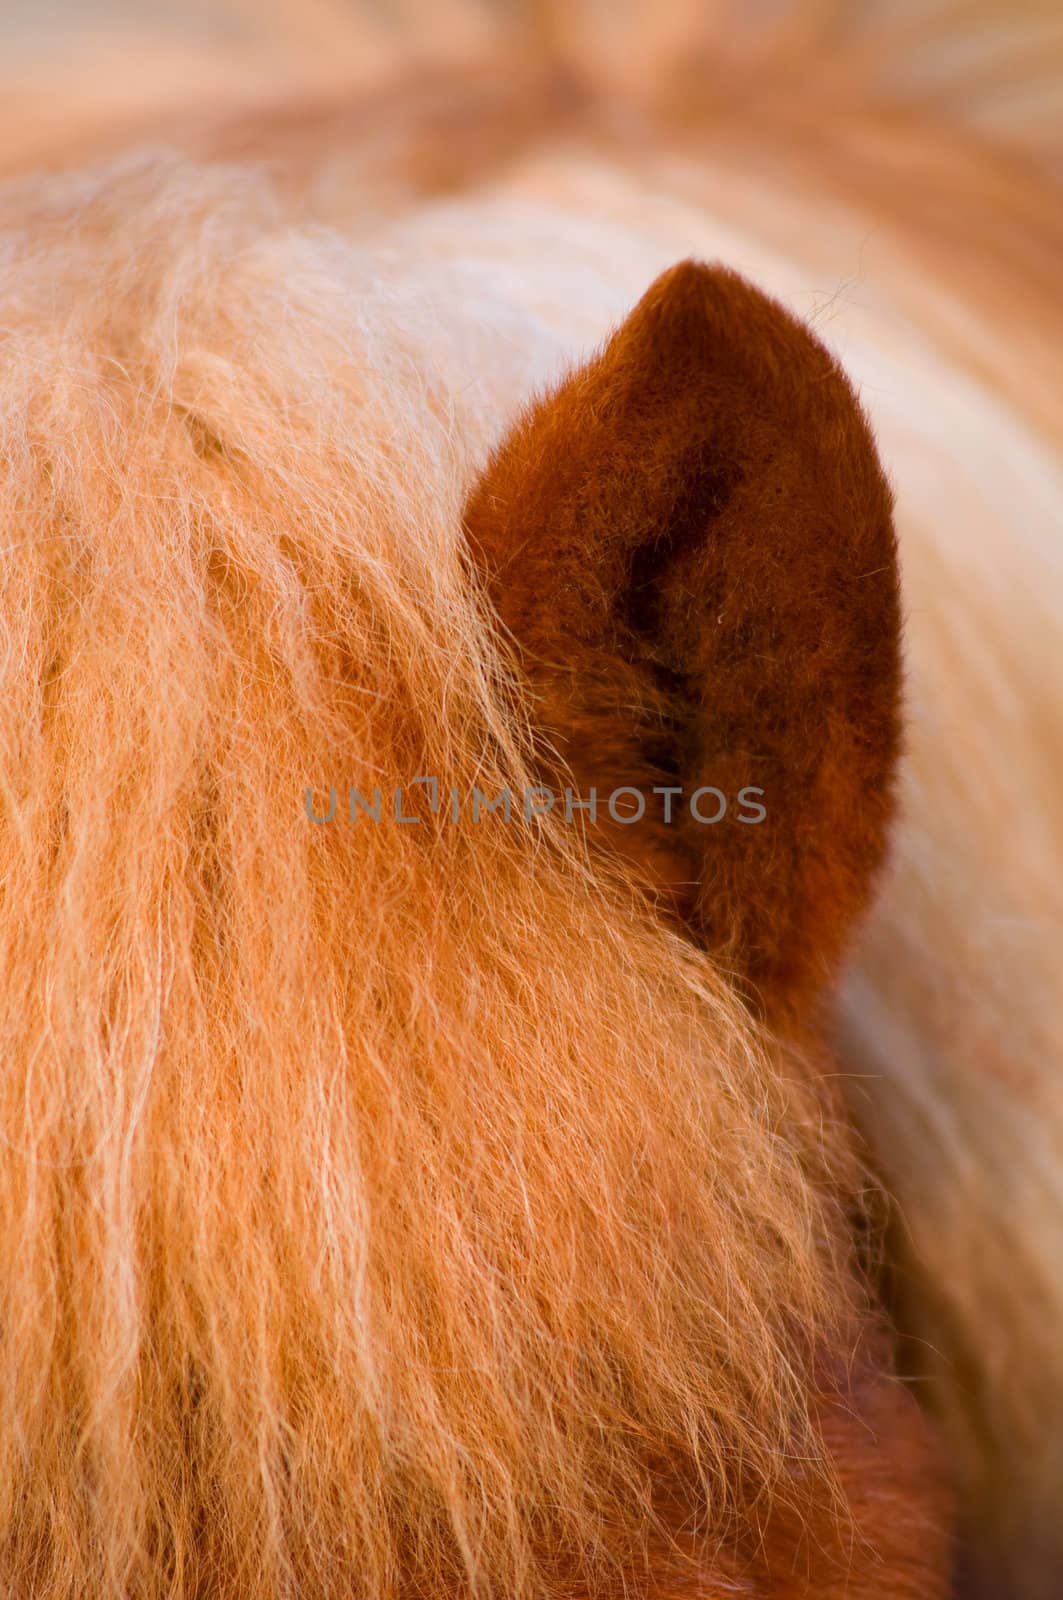 closeup of horses ear and mane